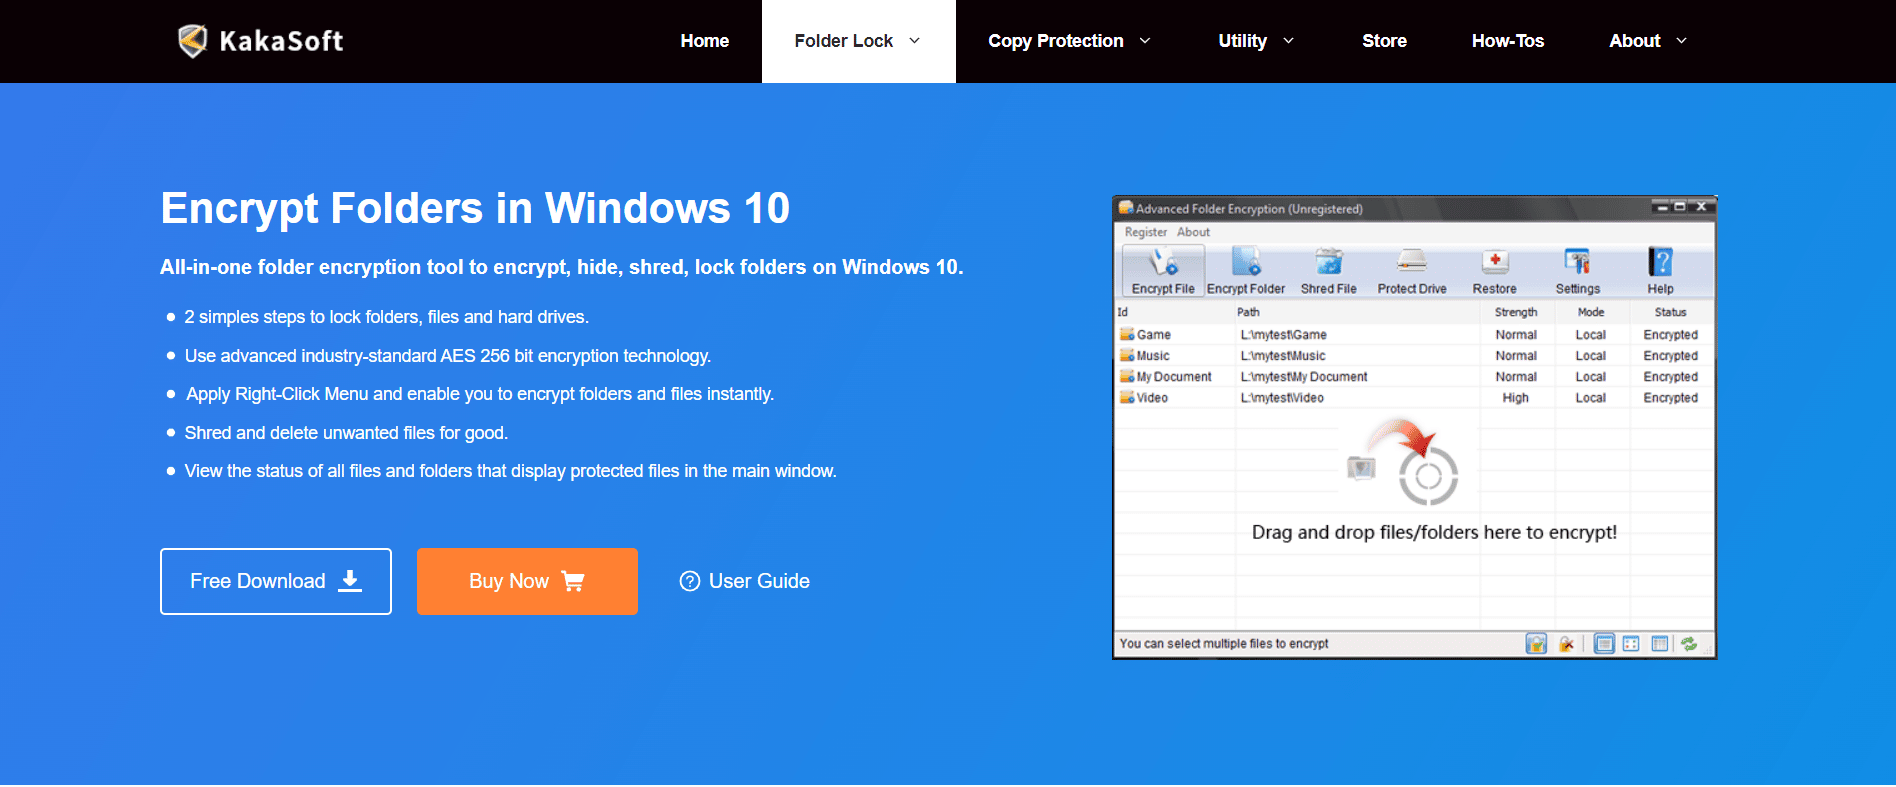 Advanced Folder Encryption best folder lock software for Windows 7 10 PC free download